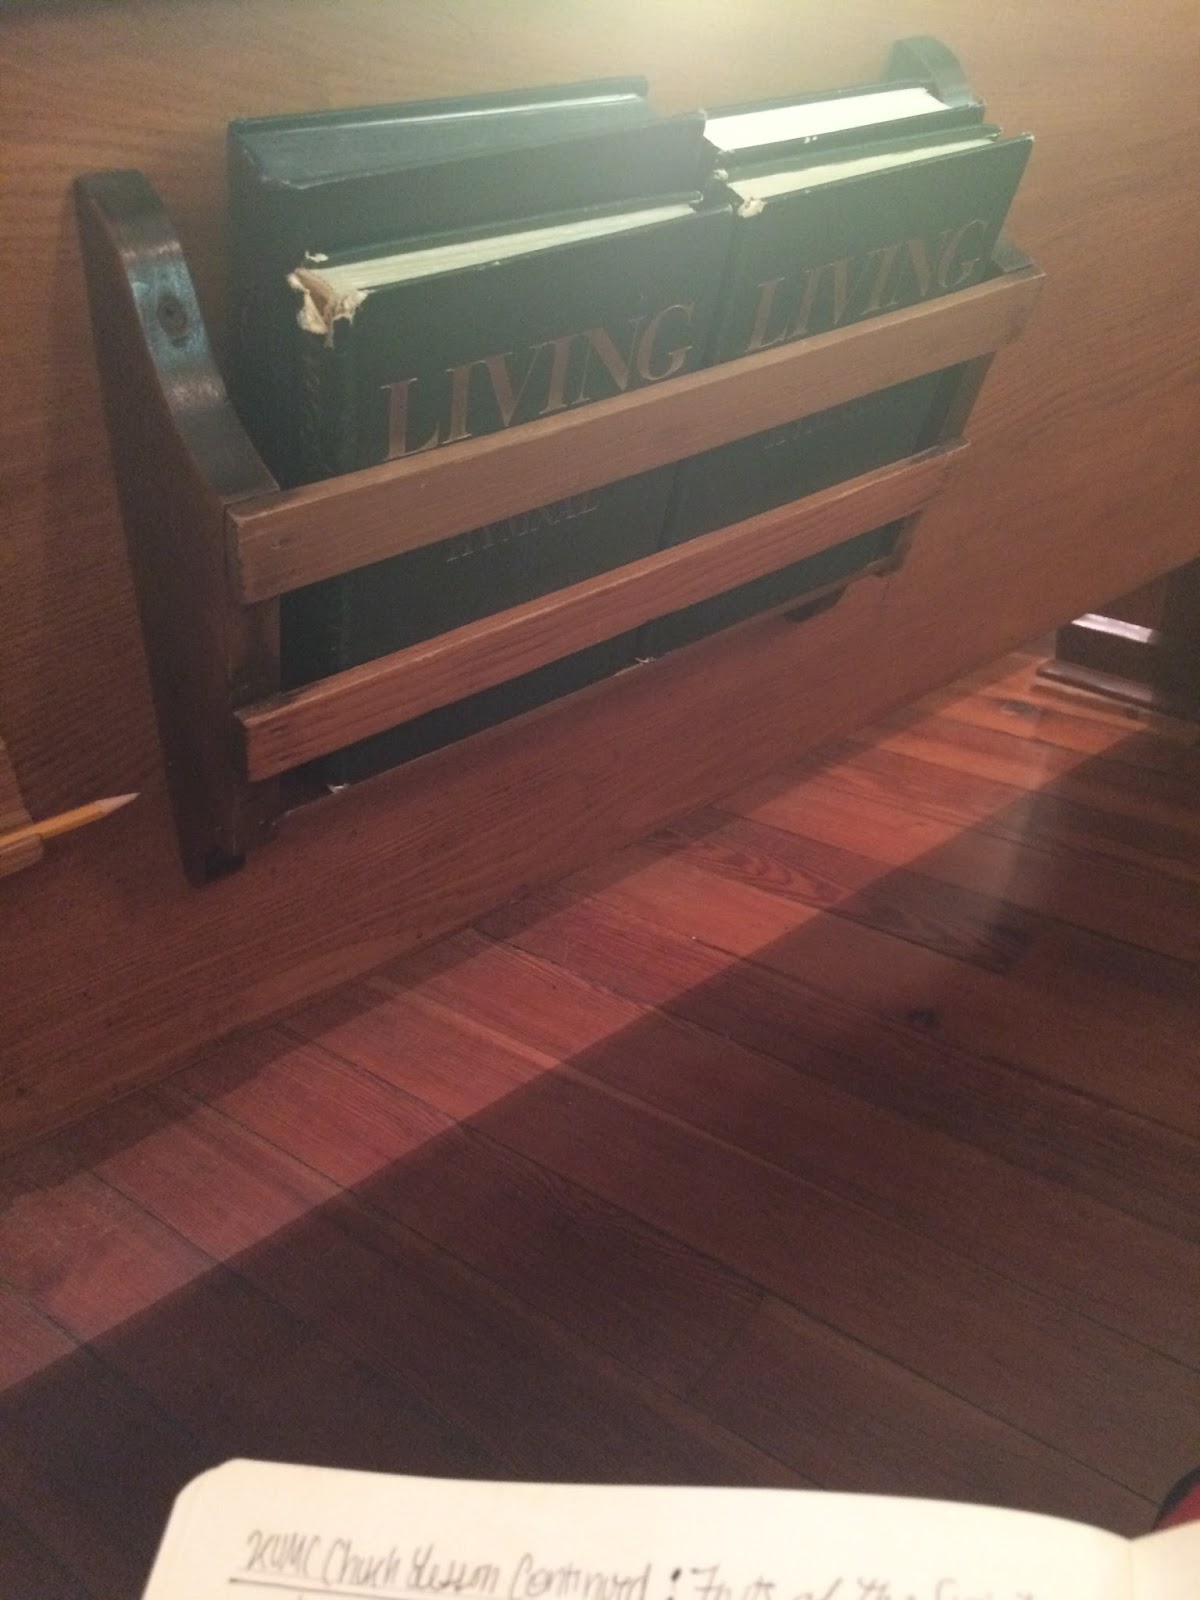 Hymnal in book holder in a church pew